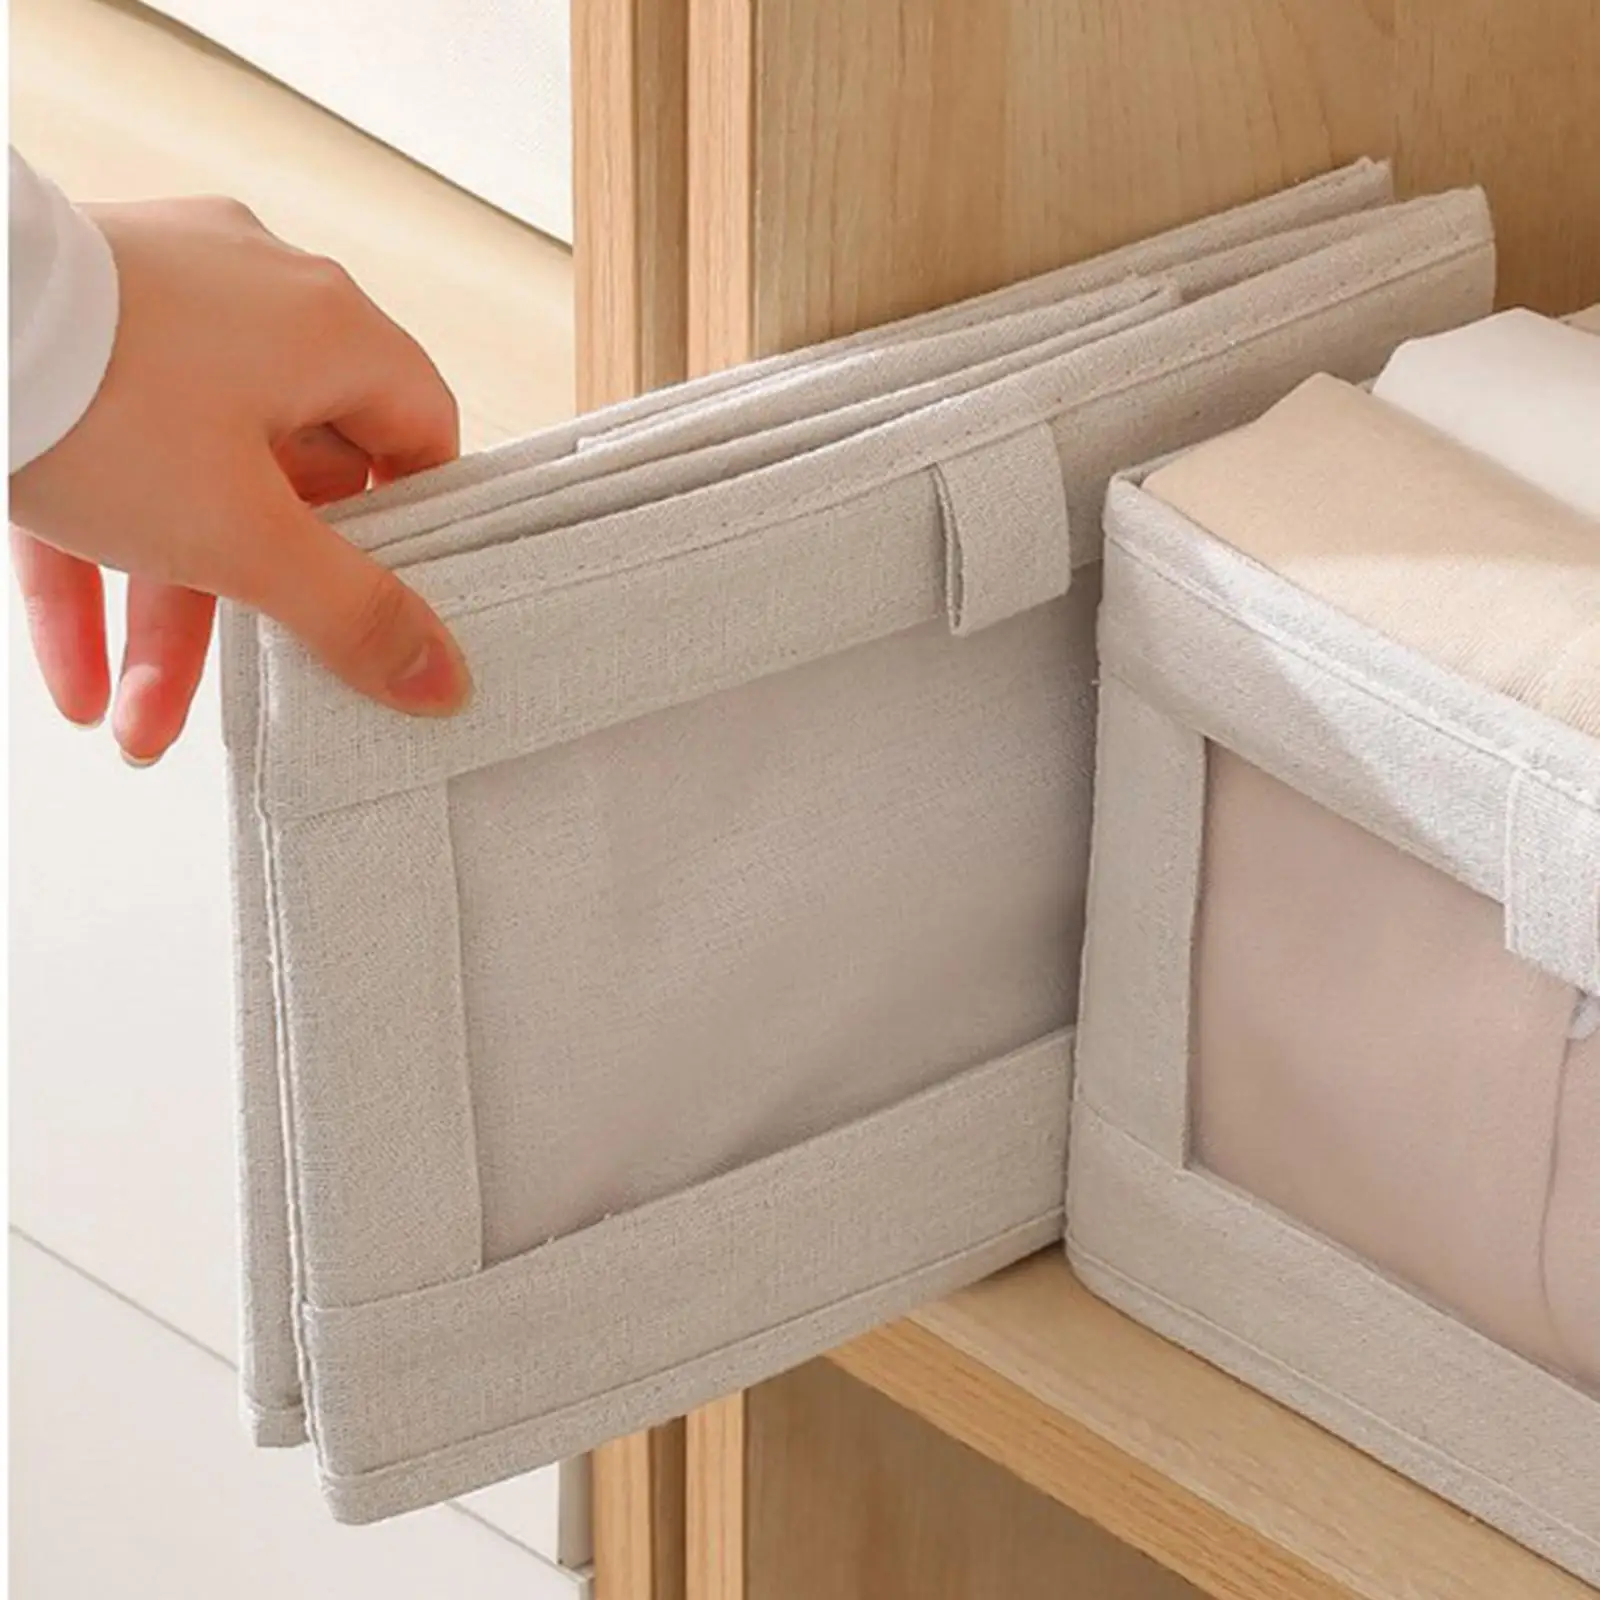 Clothes Organizer Storage Box Storage Basket for Blanket Clothing Clothes